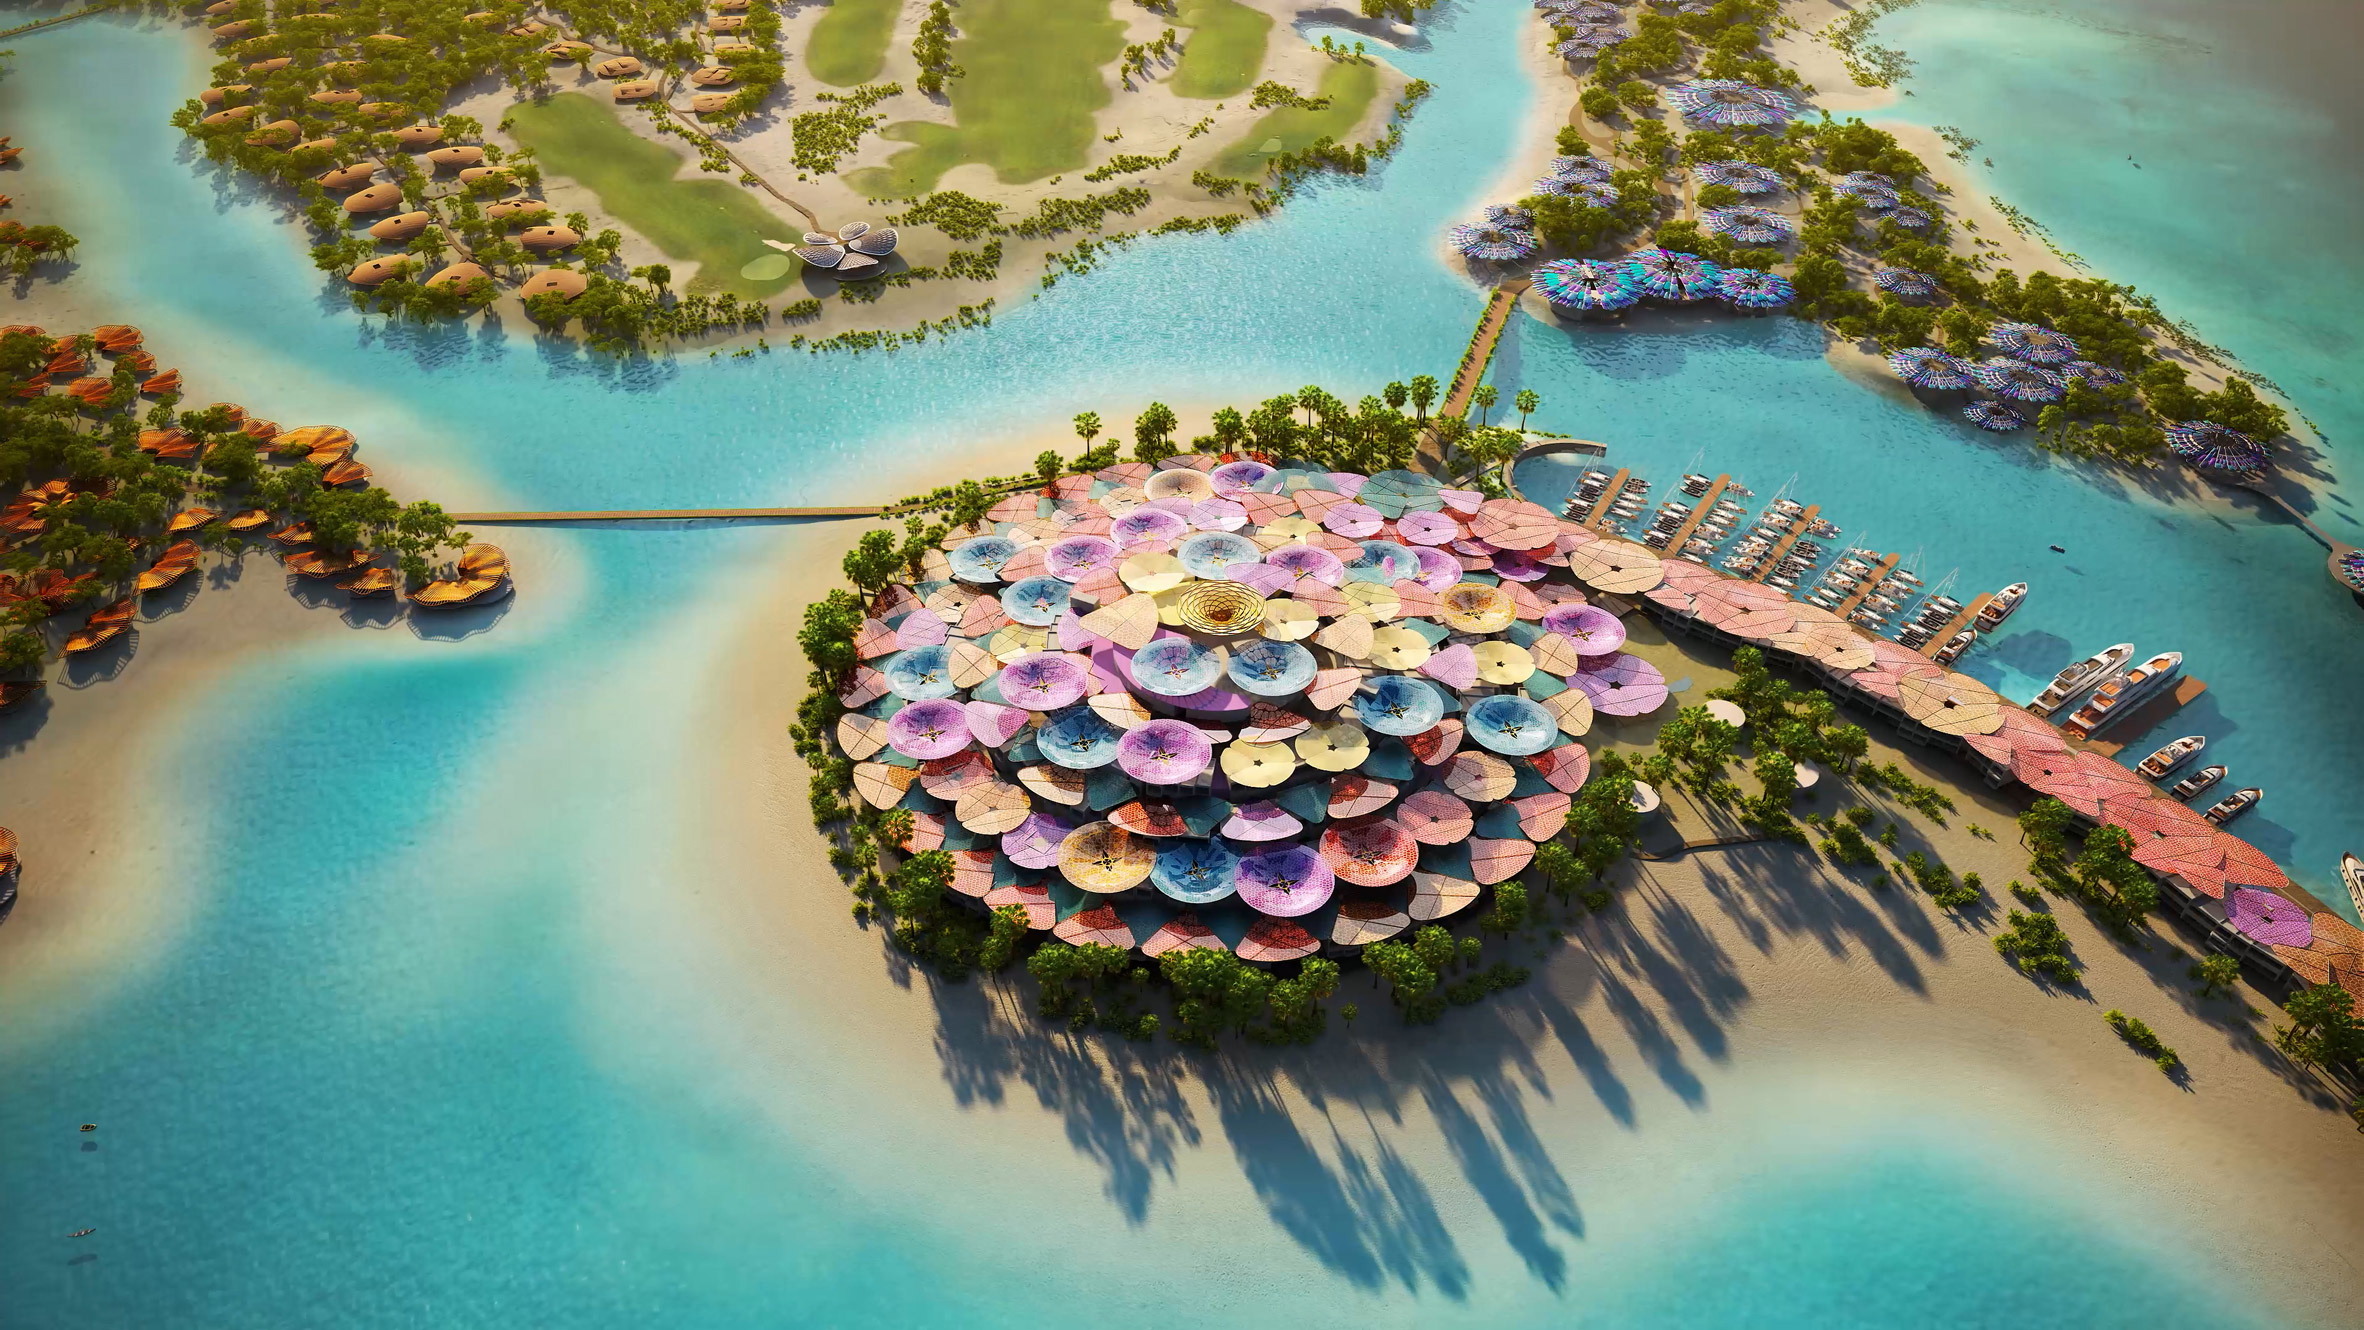 Coral Bloom resort by Foster + Partners in Saudi Arabia